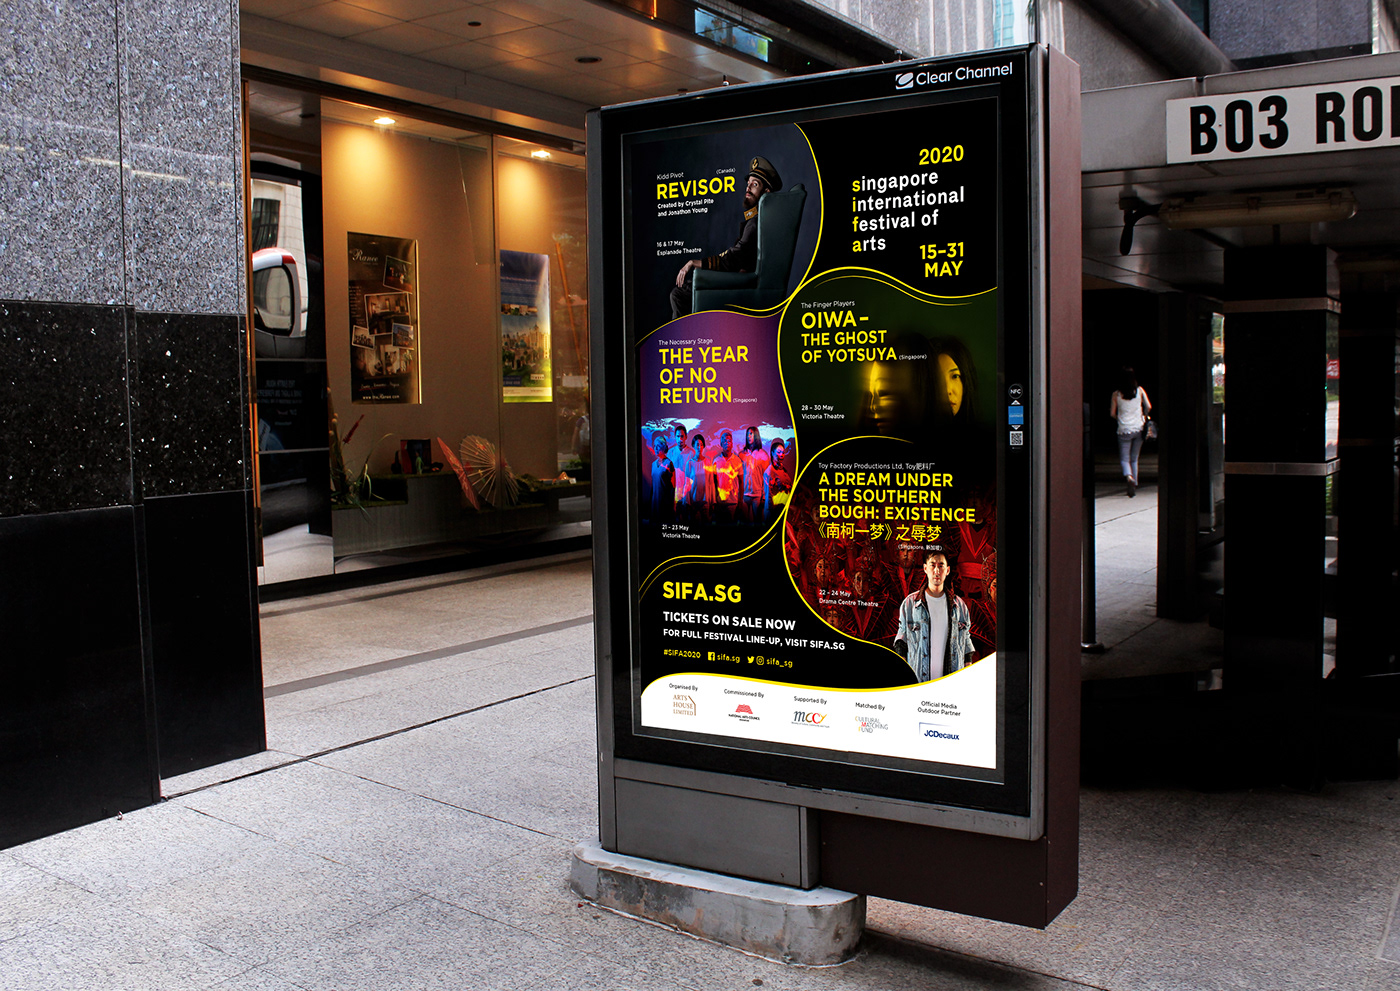 Arts Festival Event International Musical singapore Theatre yellow & black